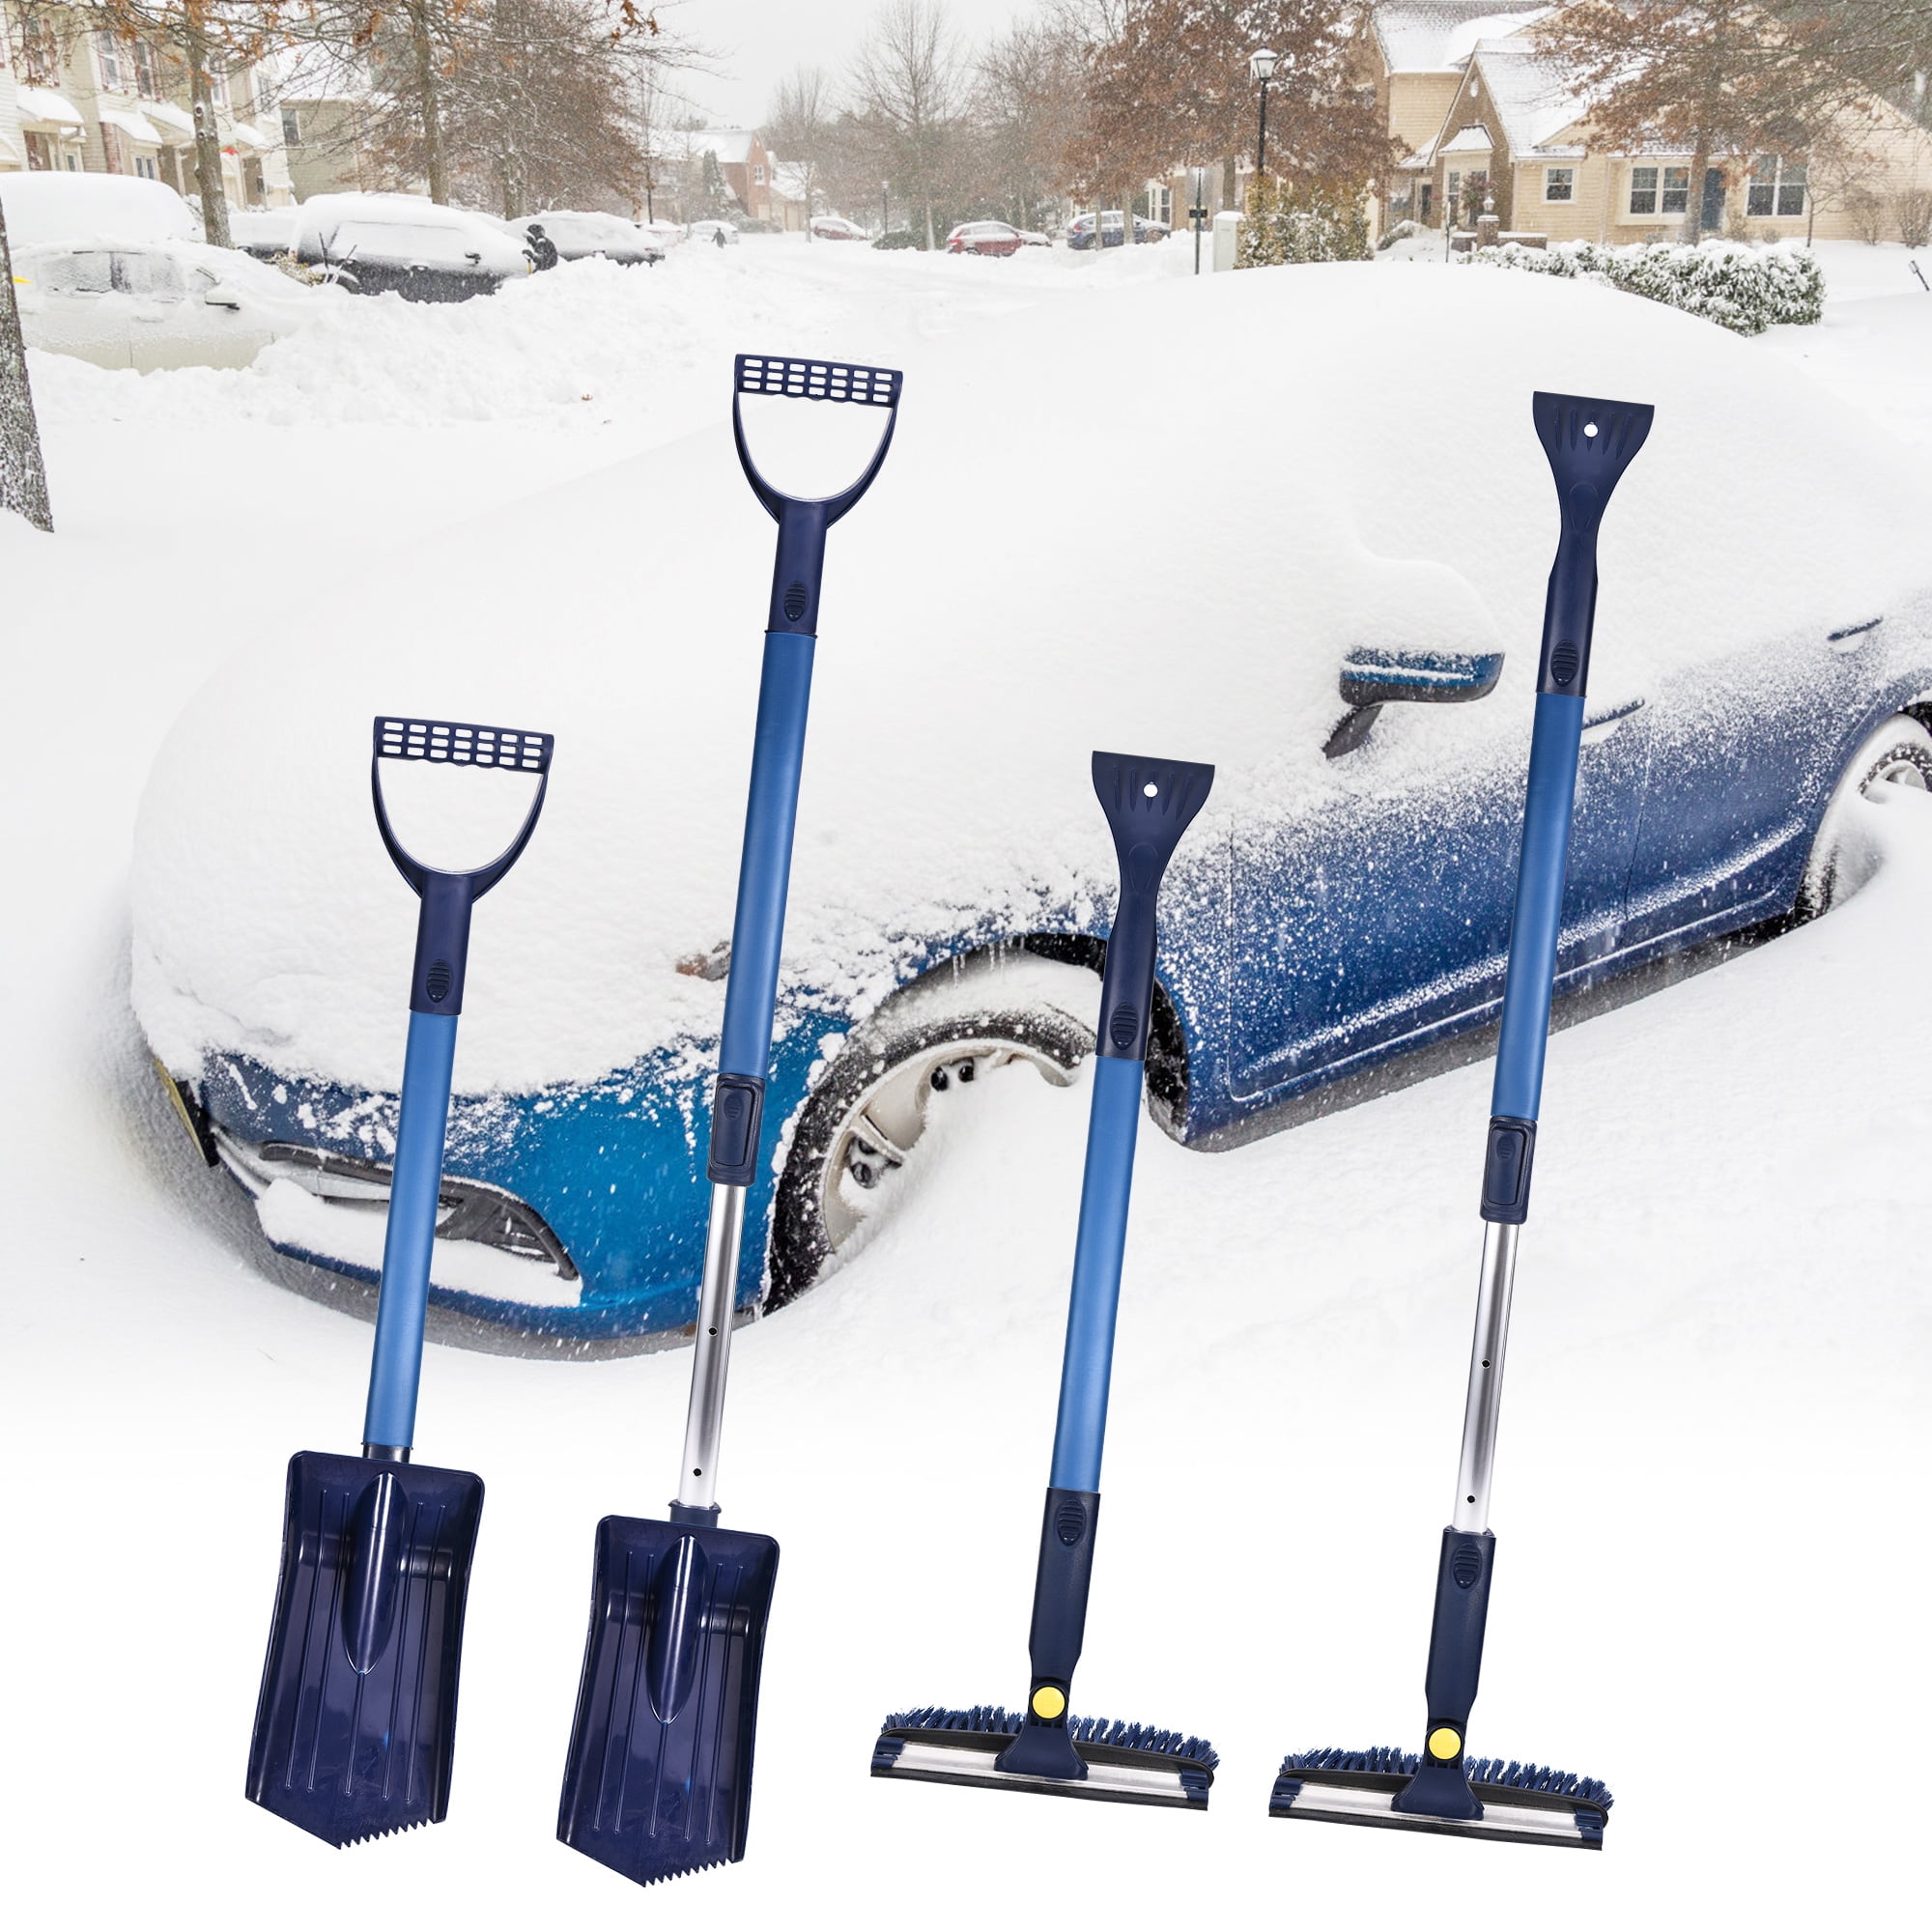 Gazdag]Snow Brush and Ice Scraper for Car Windshield with for Cars, SUV,  Trucks - Detachable Scraper - No Scratch - Heavy Duty Handle, Snow Broom,  Remover, Easy Scraper 